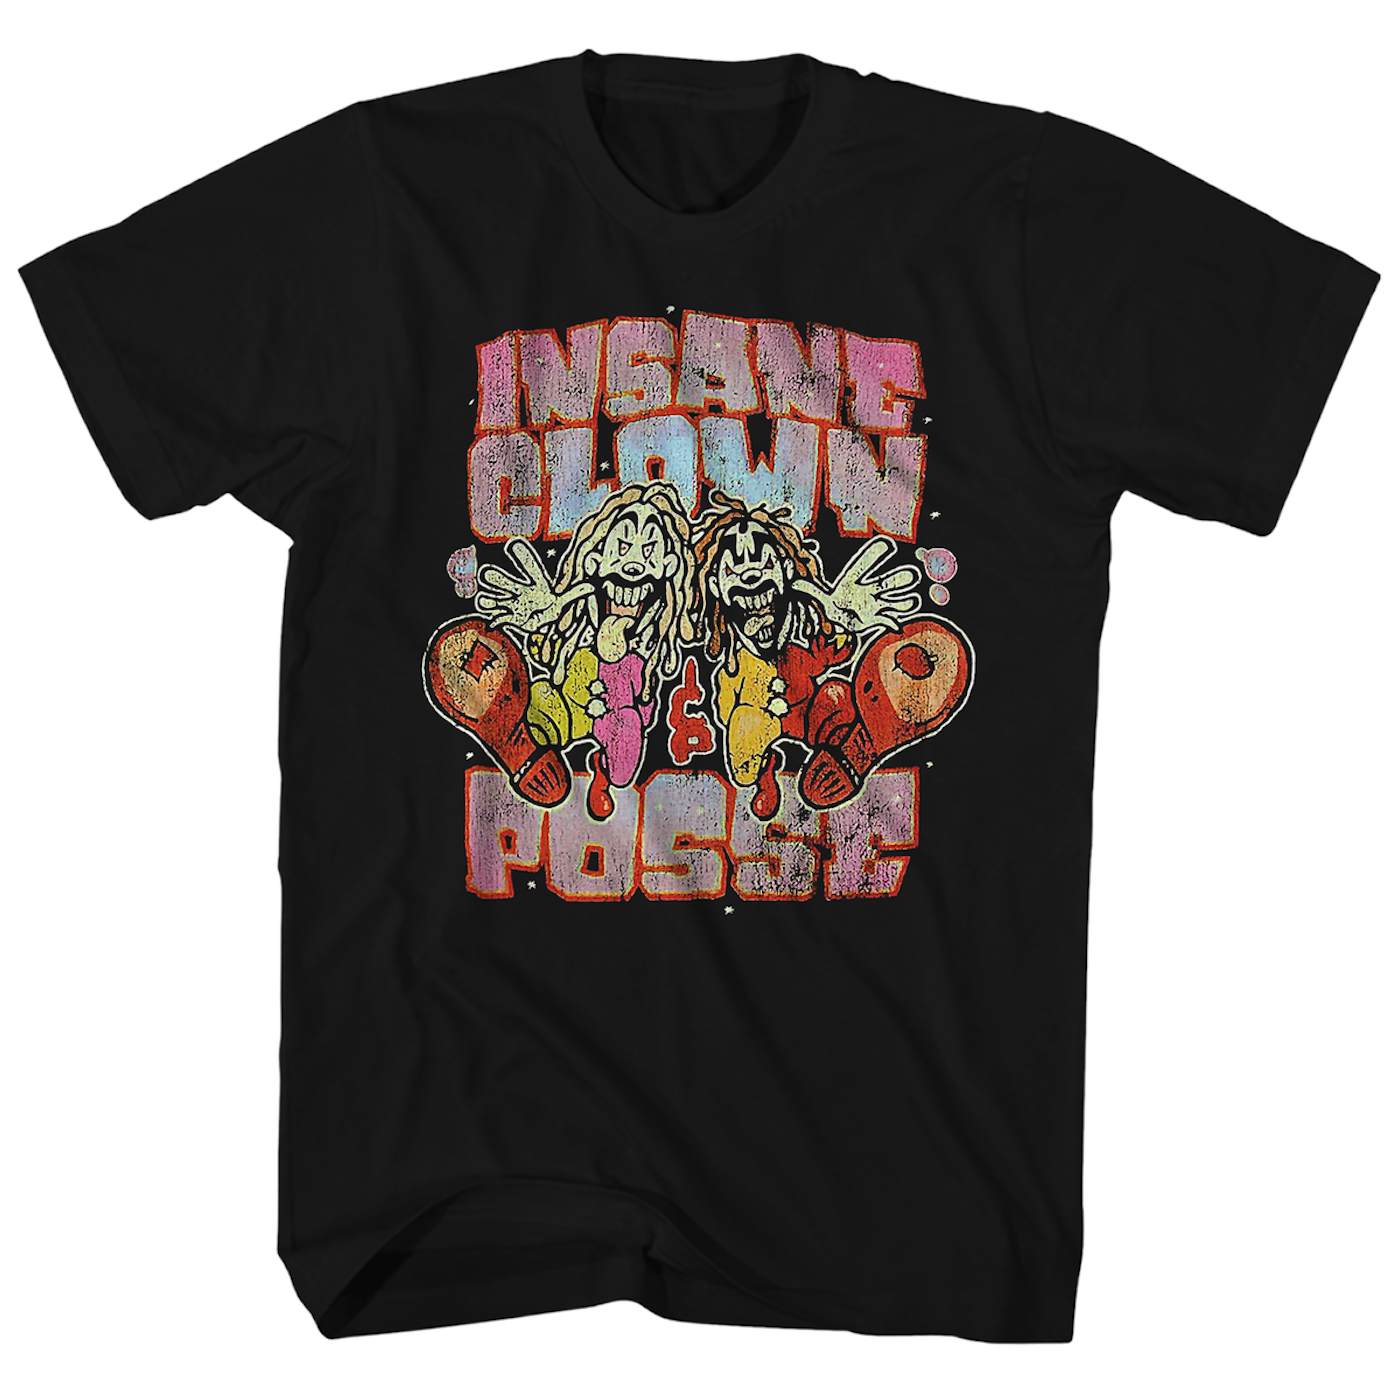 Insane Clown Posse T-Shirt | Juggalo Funhouse Supershow Insane Clown Posse Shirt